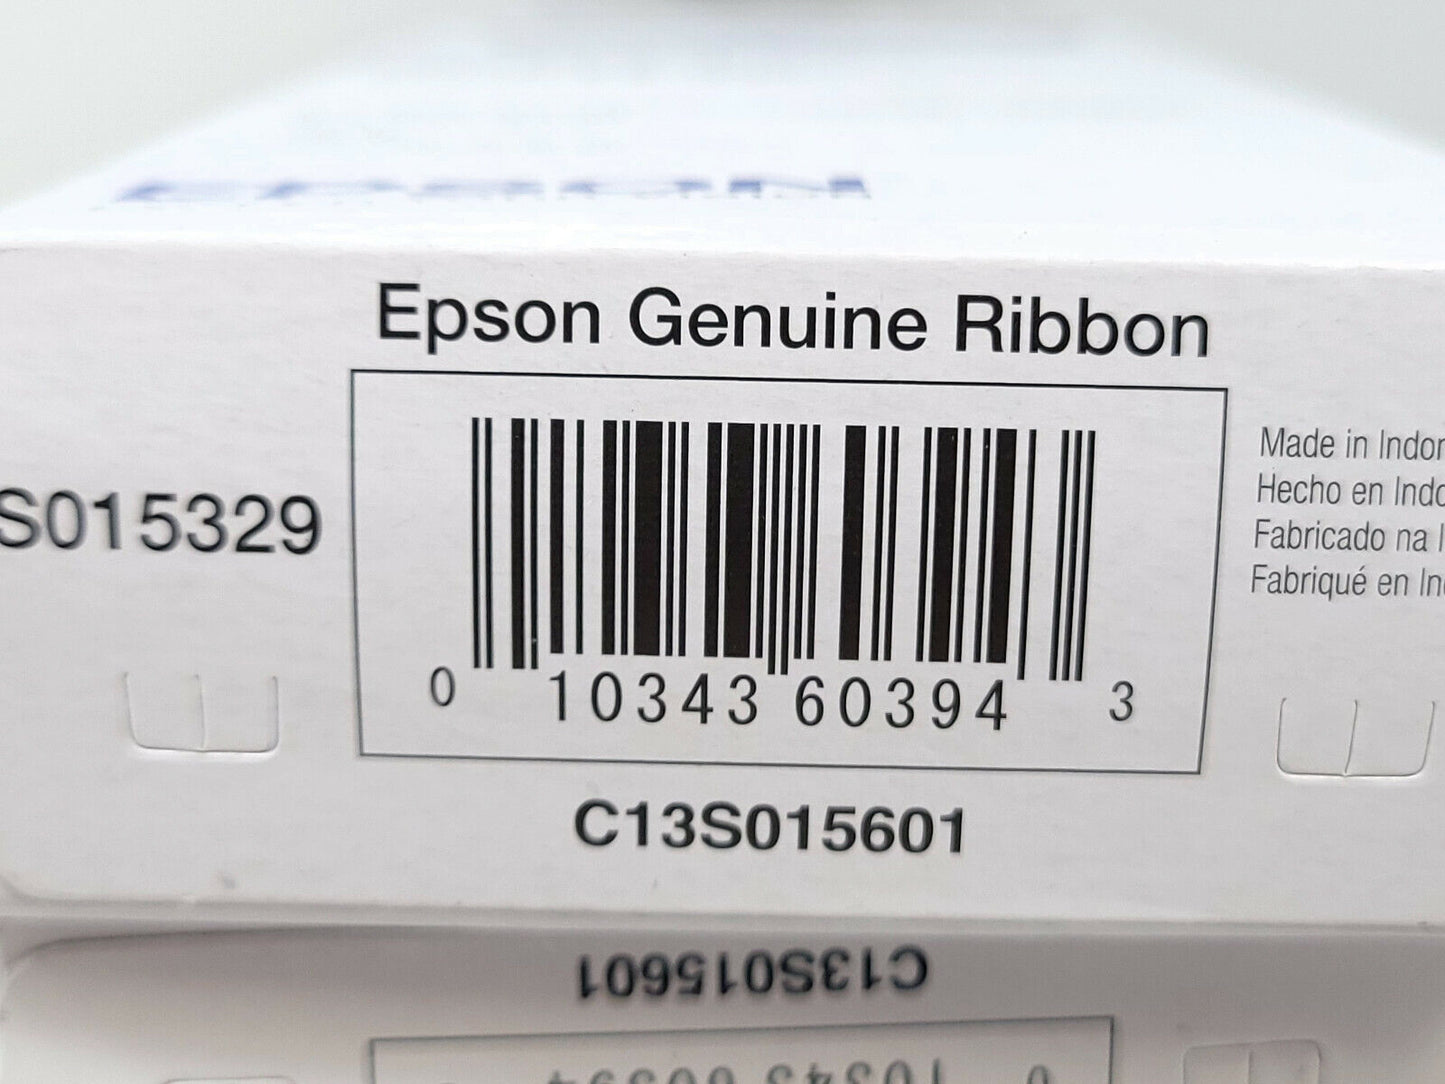 Lot 4x Epson S015329 FX-890 Fabric Ribbon Cartridge, Black, 17m - New - READ